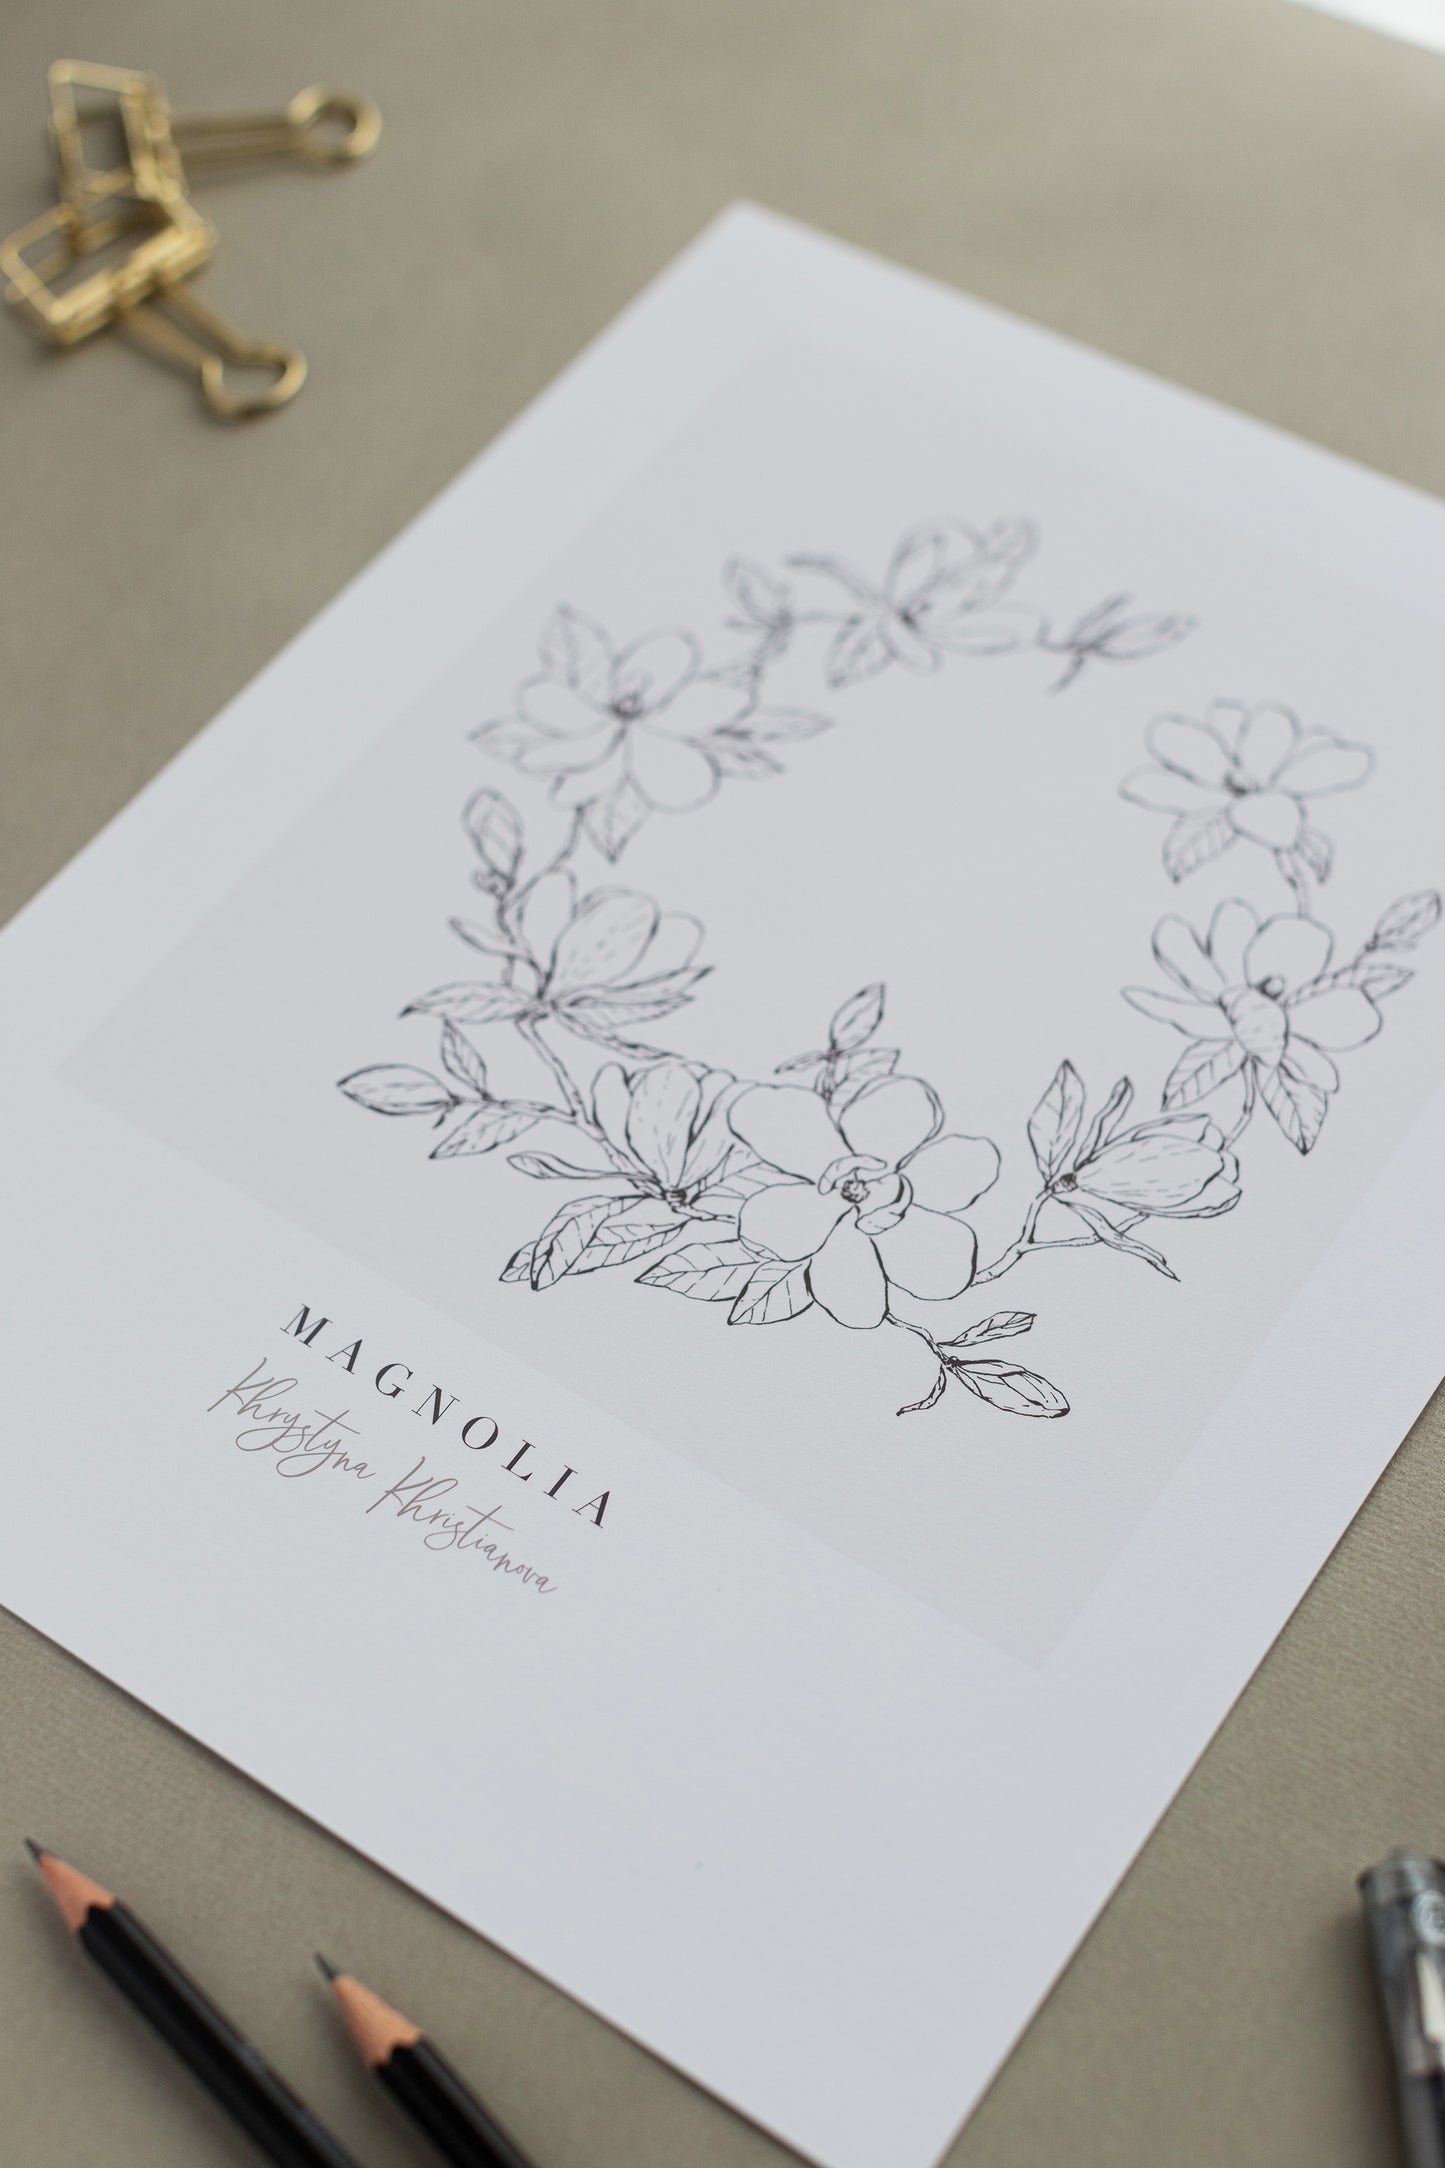 'Magnolia Wreath' giclee print. Unframed